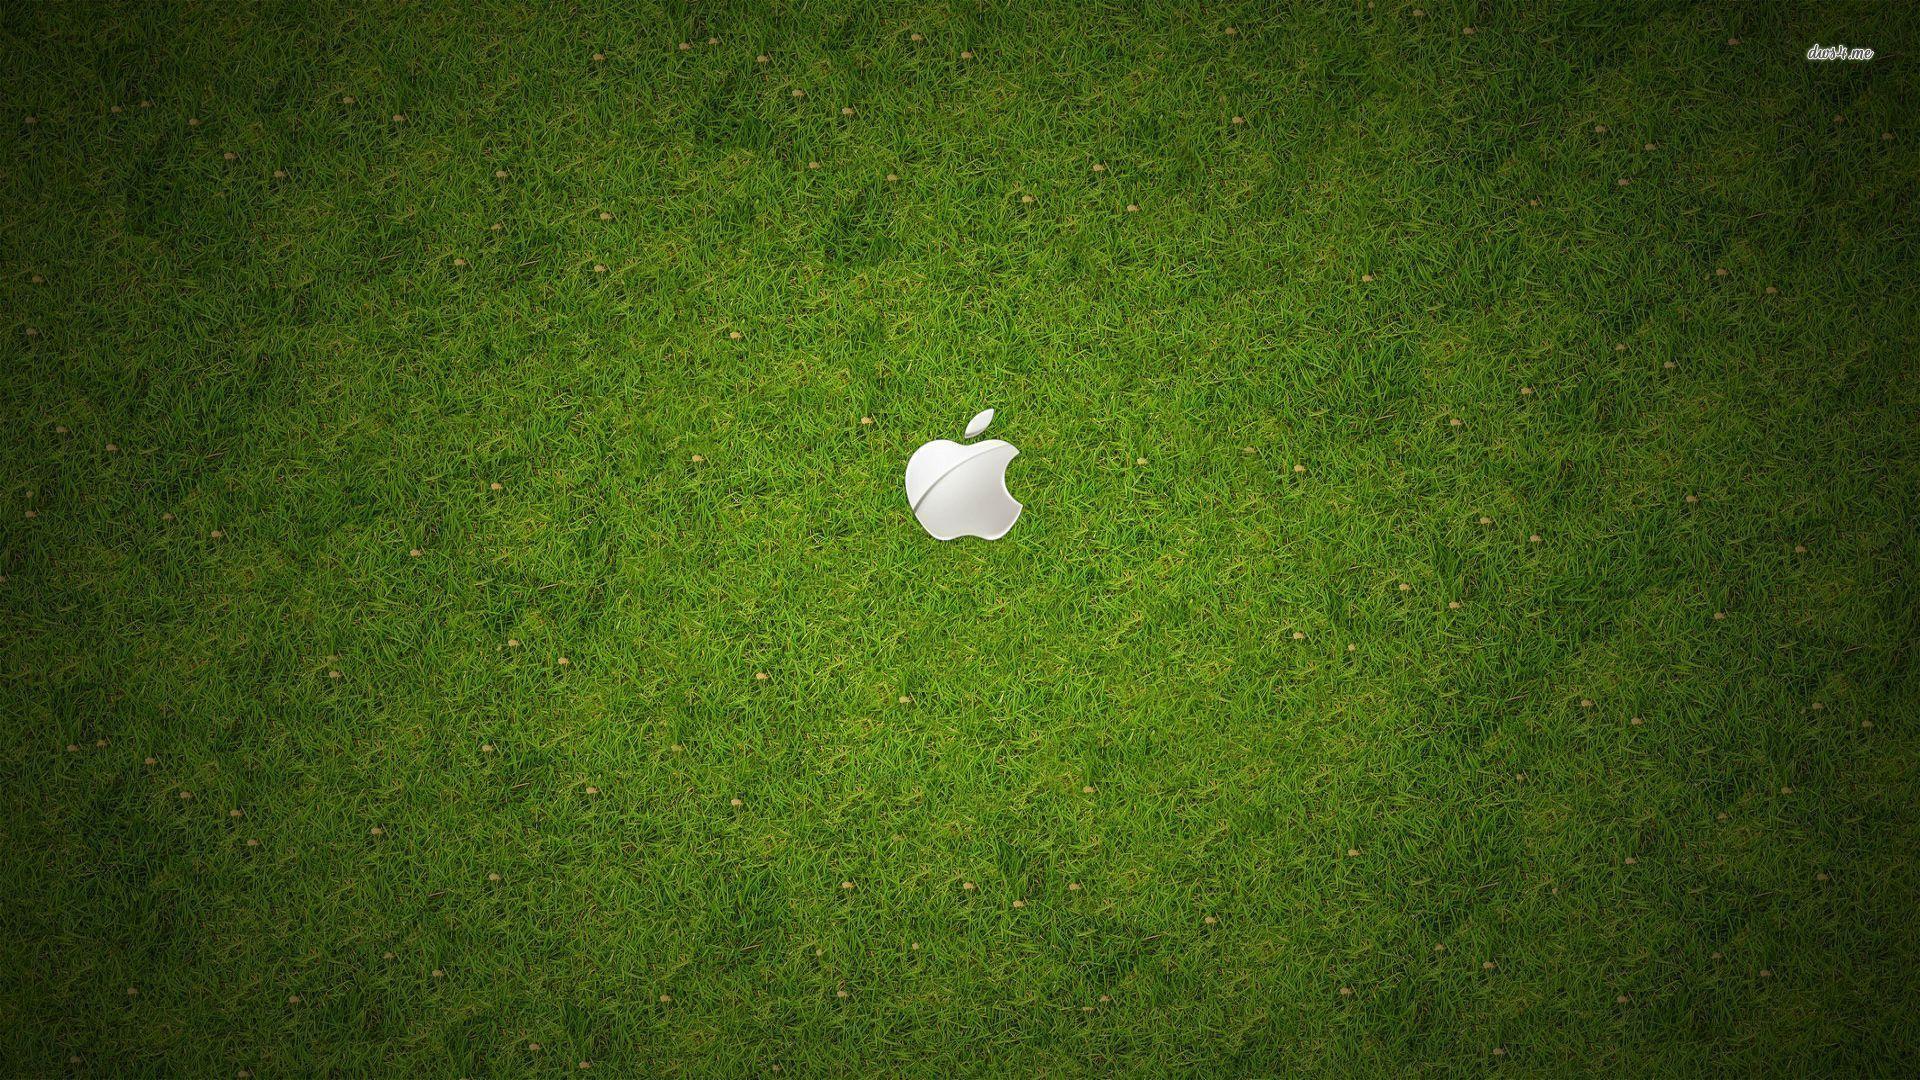 Apple logo in the grass wallpaper wallpaper - #